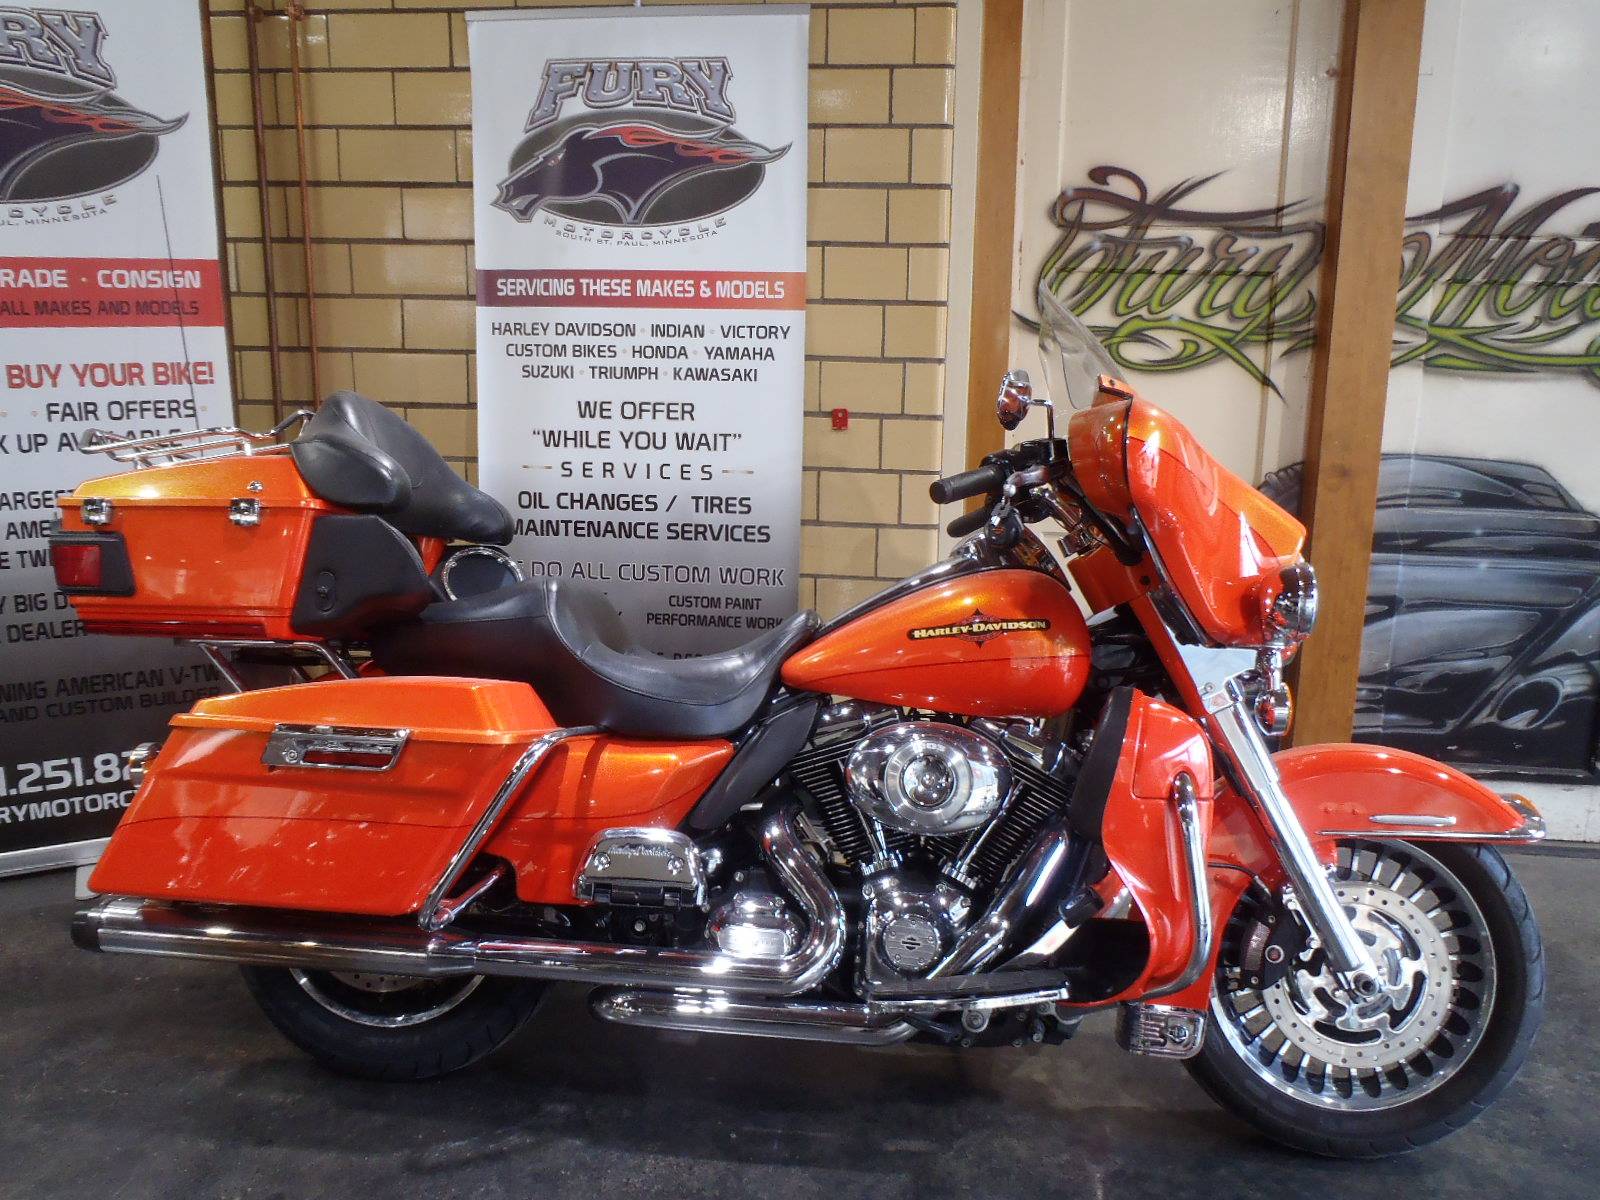 2012 Harley Davidson Electra Glide Ultra Limited Motorcycles South Saint Paul Minnesota